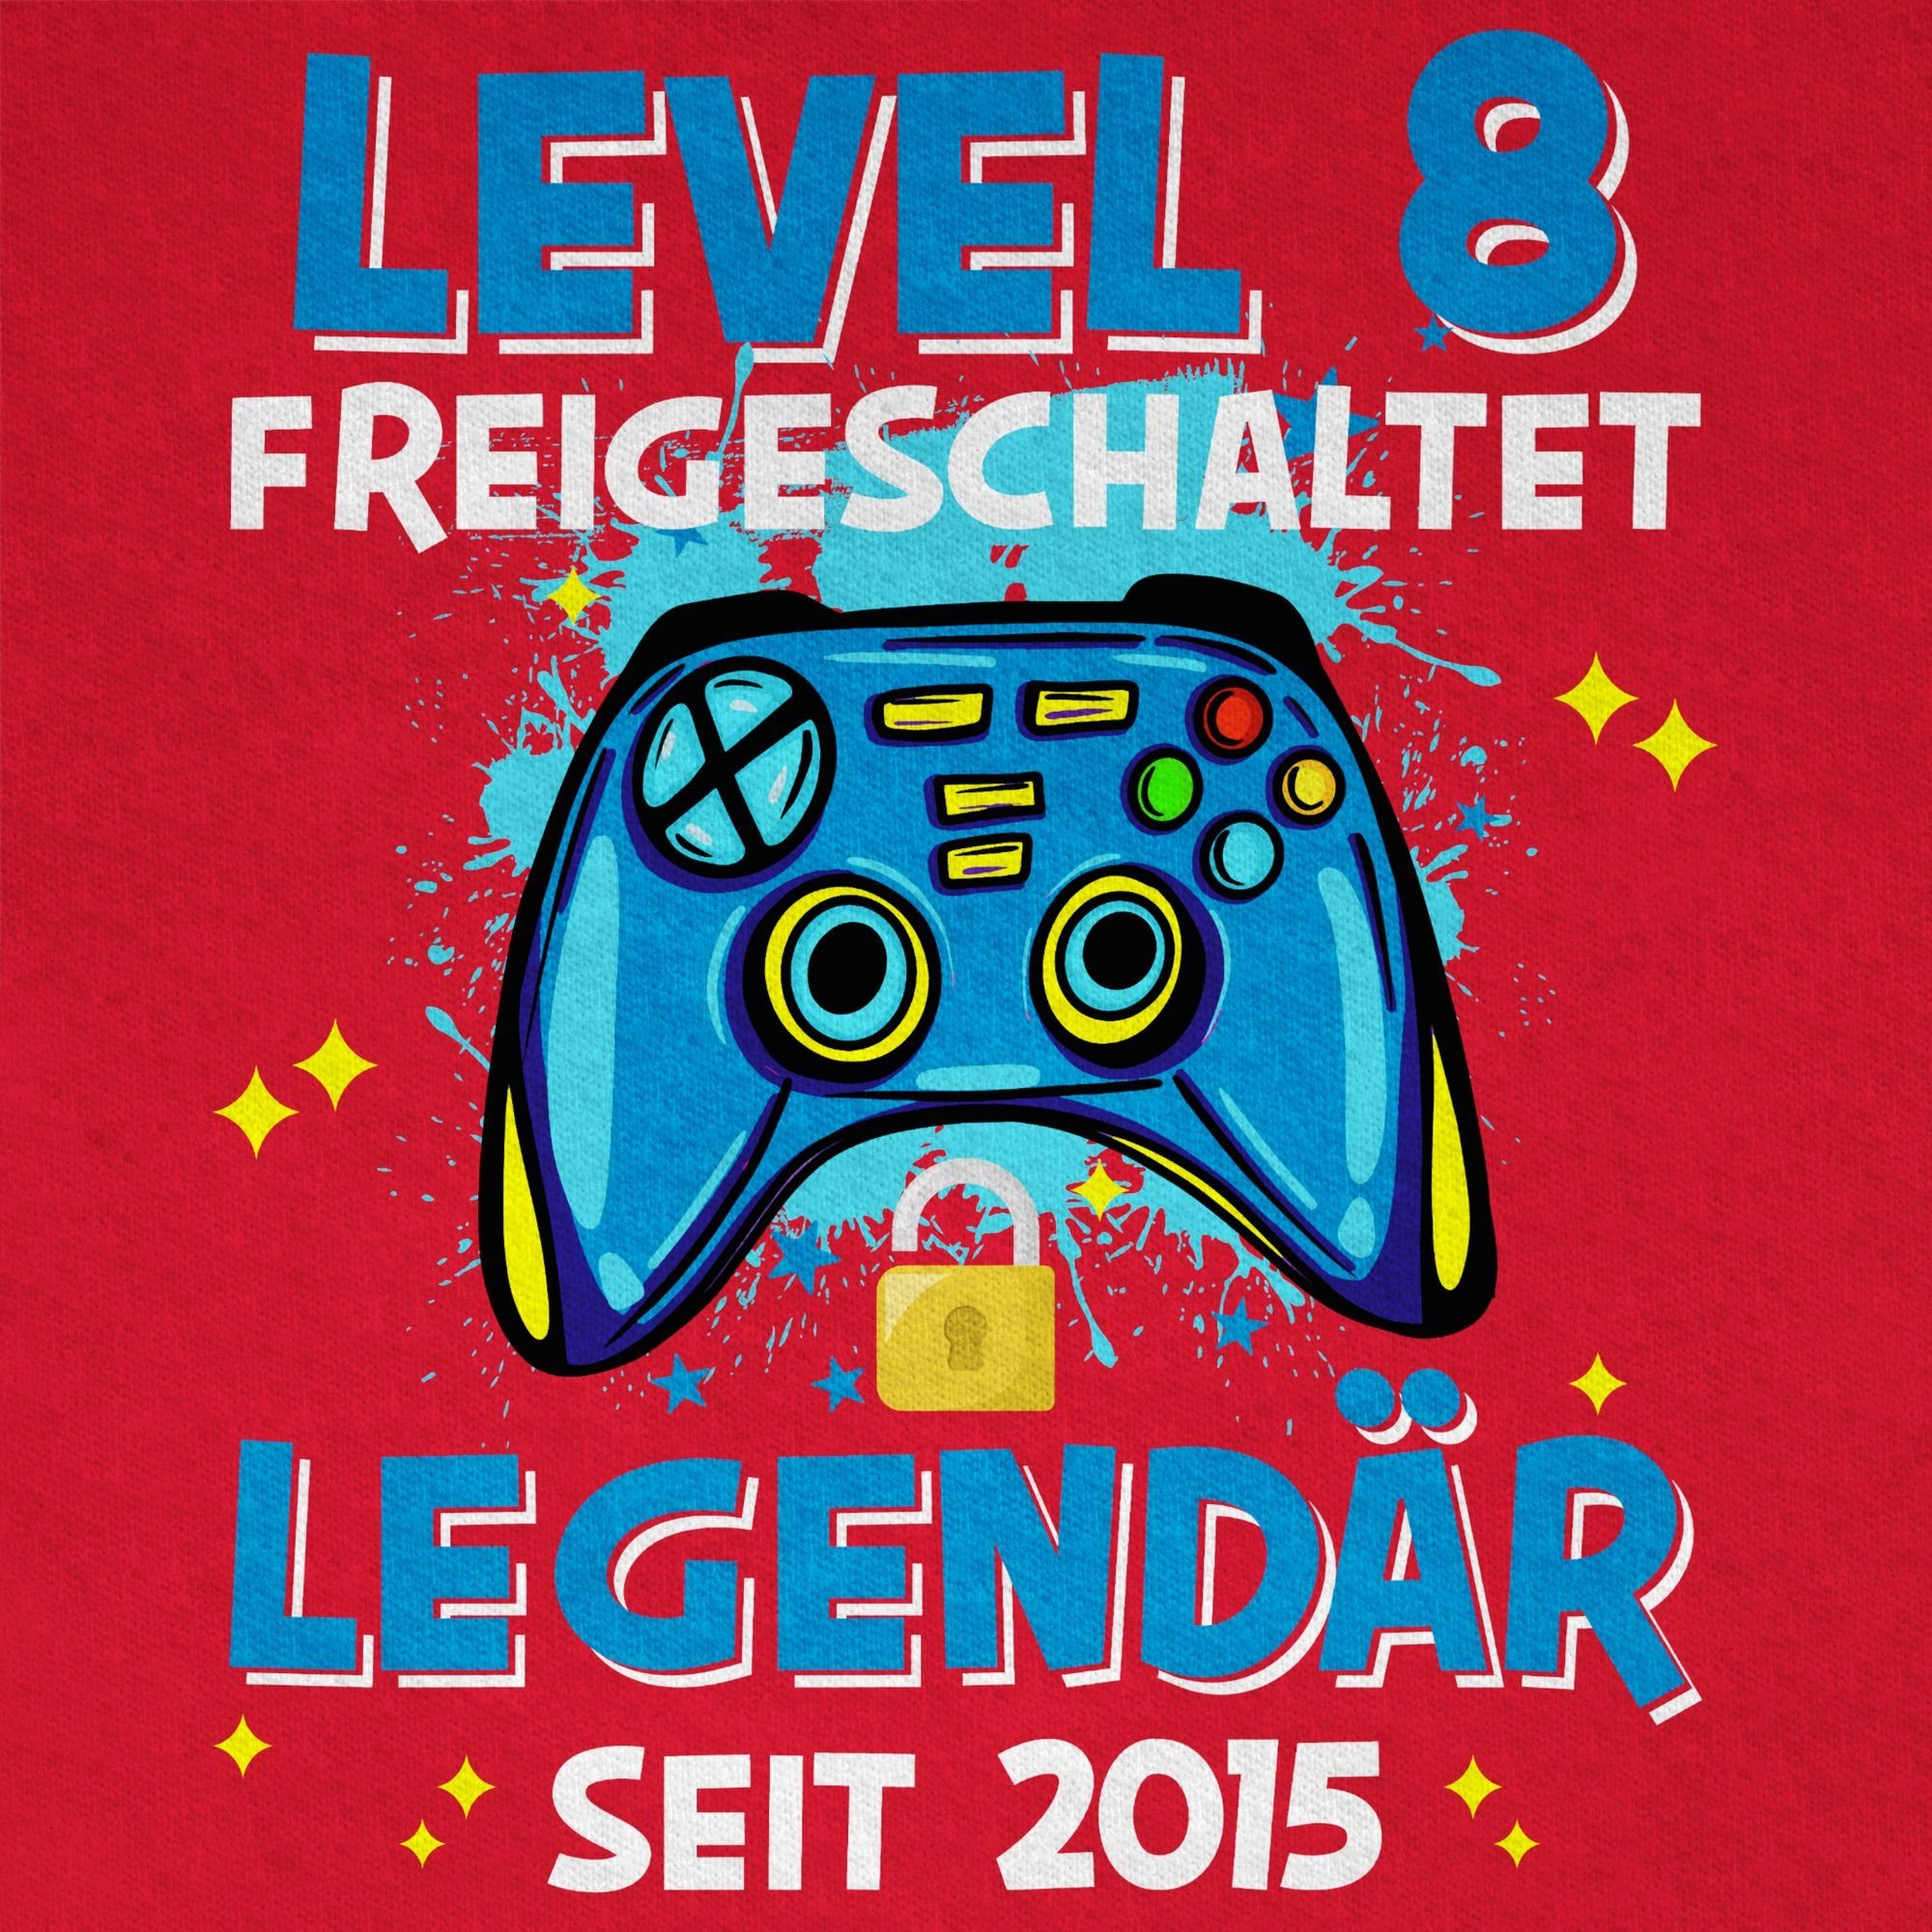 Geburtstag 8 Legendär 8. 04 Shirtracer 2015 Rot Level T-Shirt freigeschaltet seit